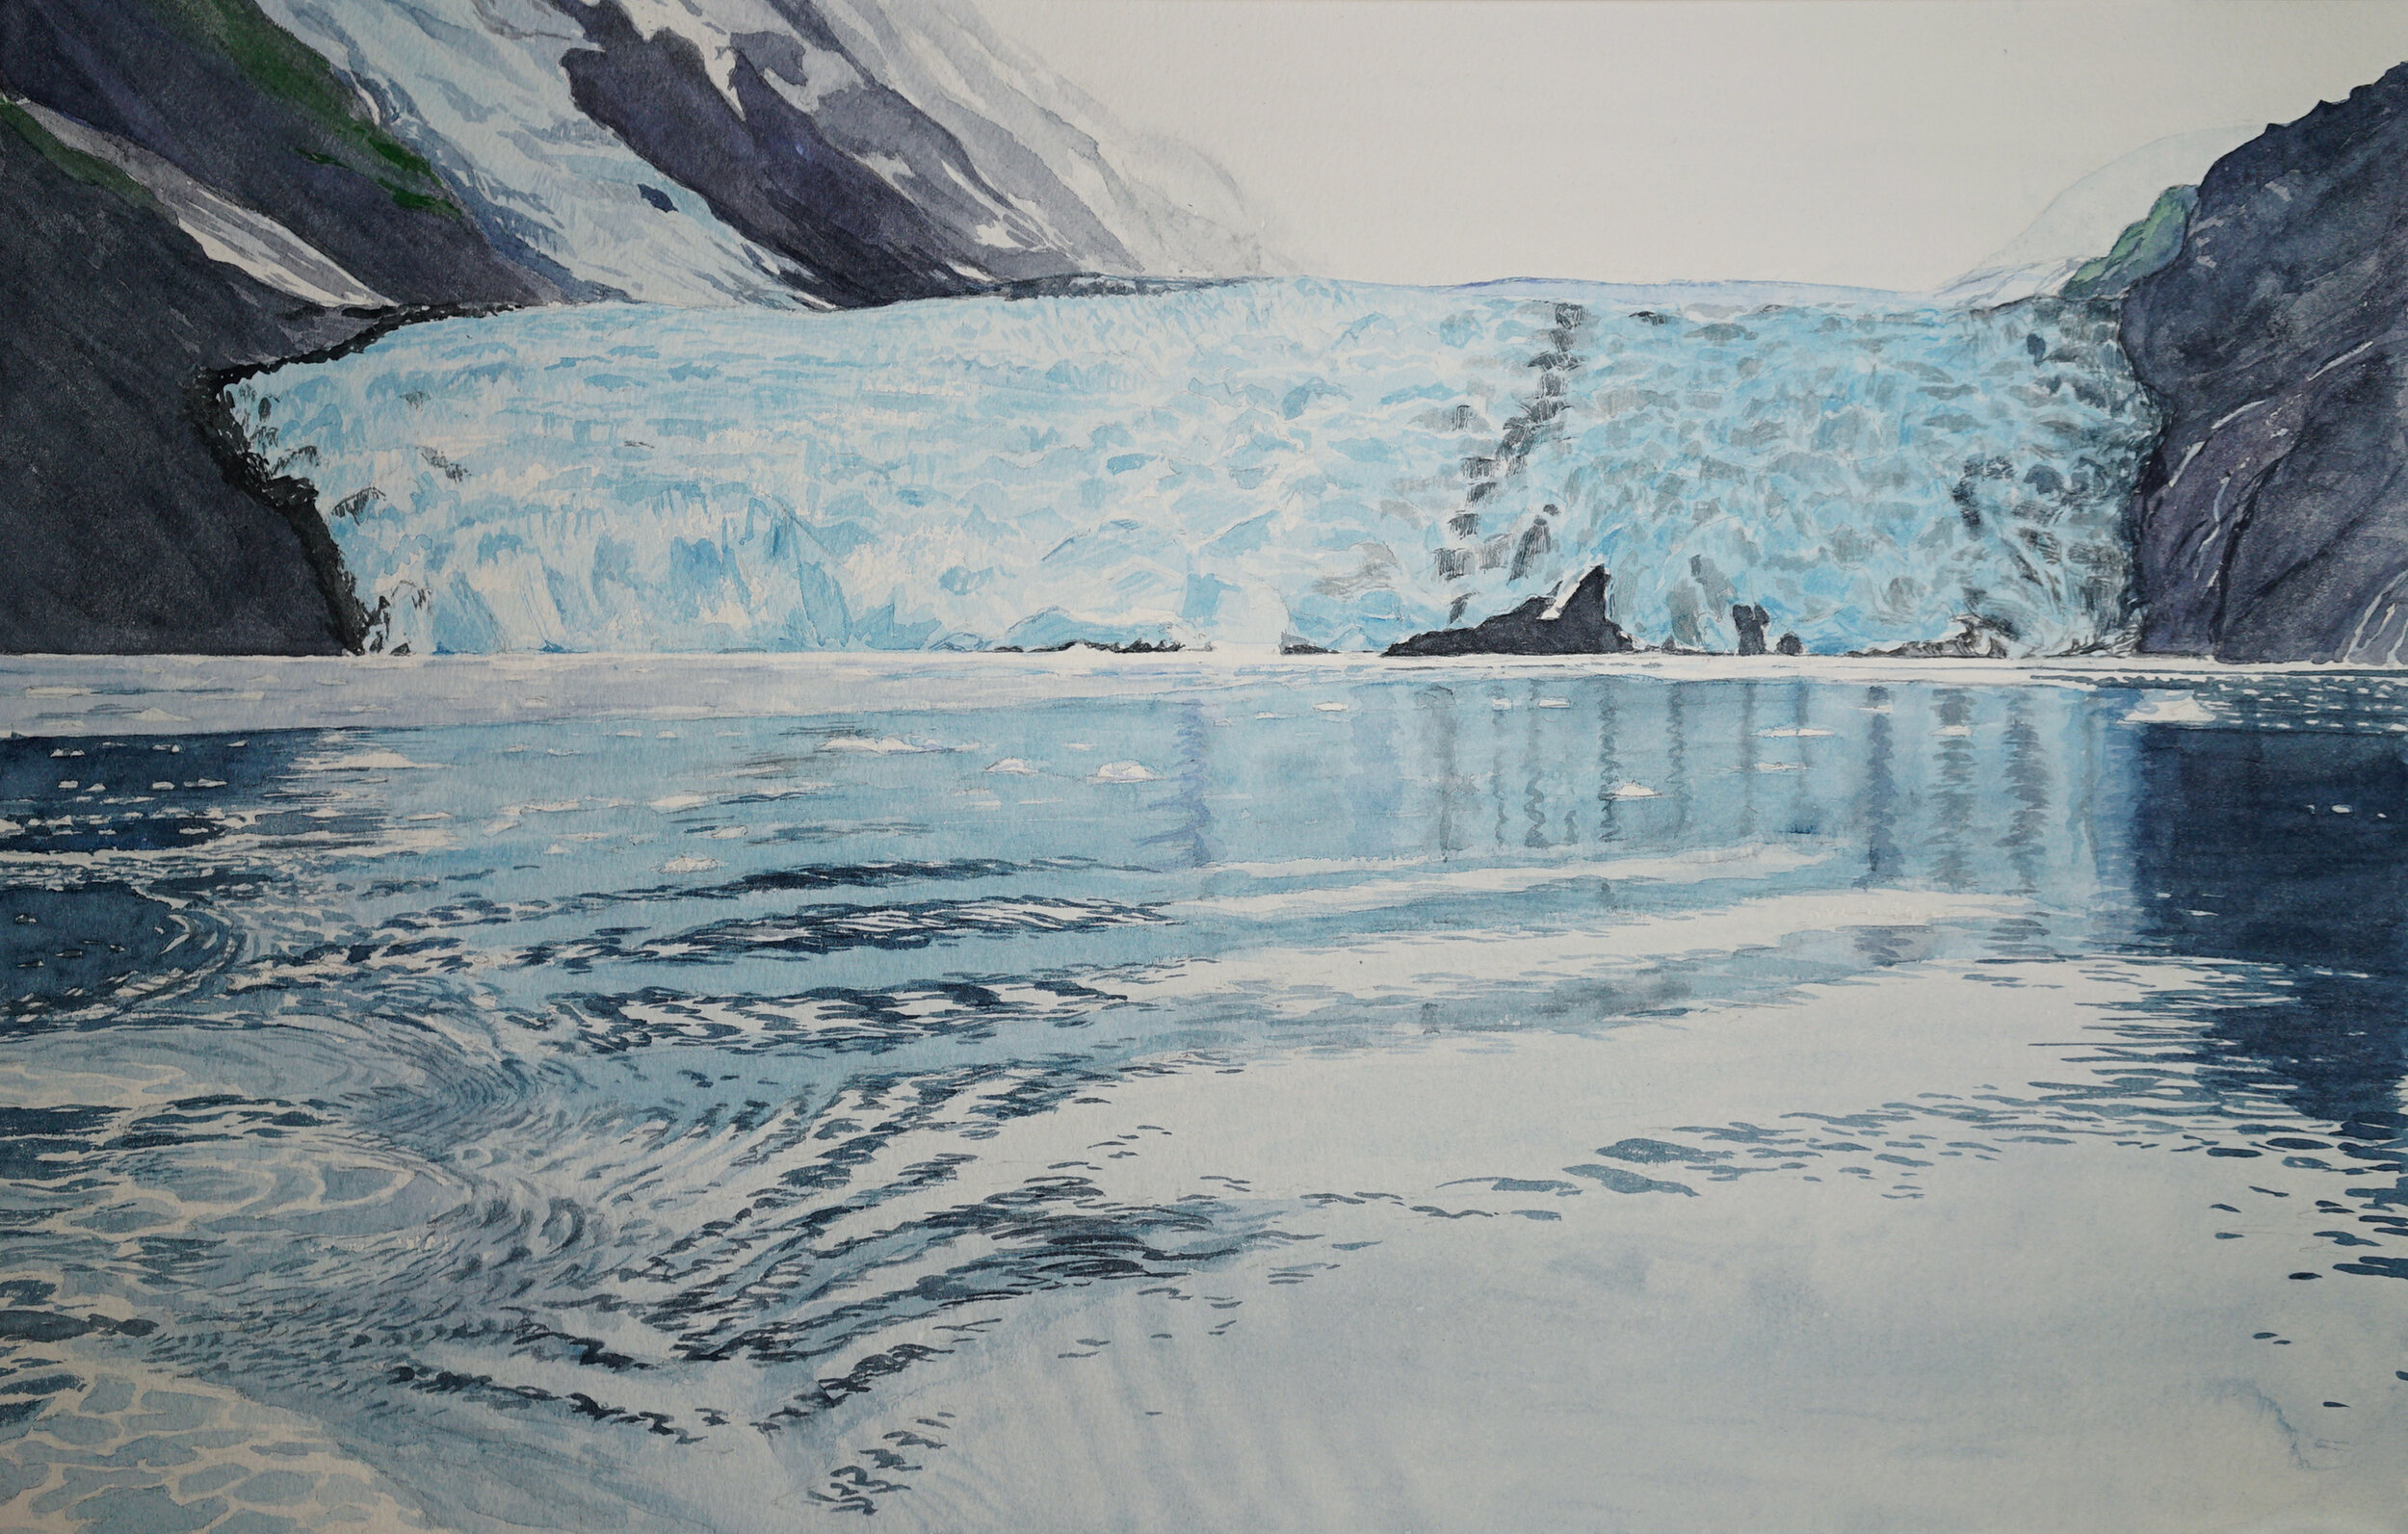 Prince William Sound Tidewater Glacier, 15x22", 2019